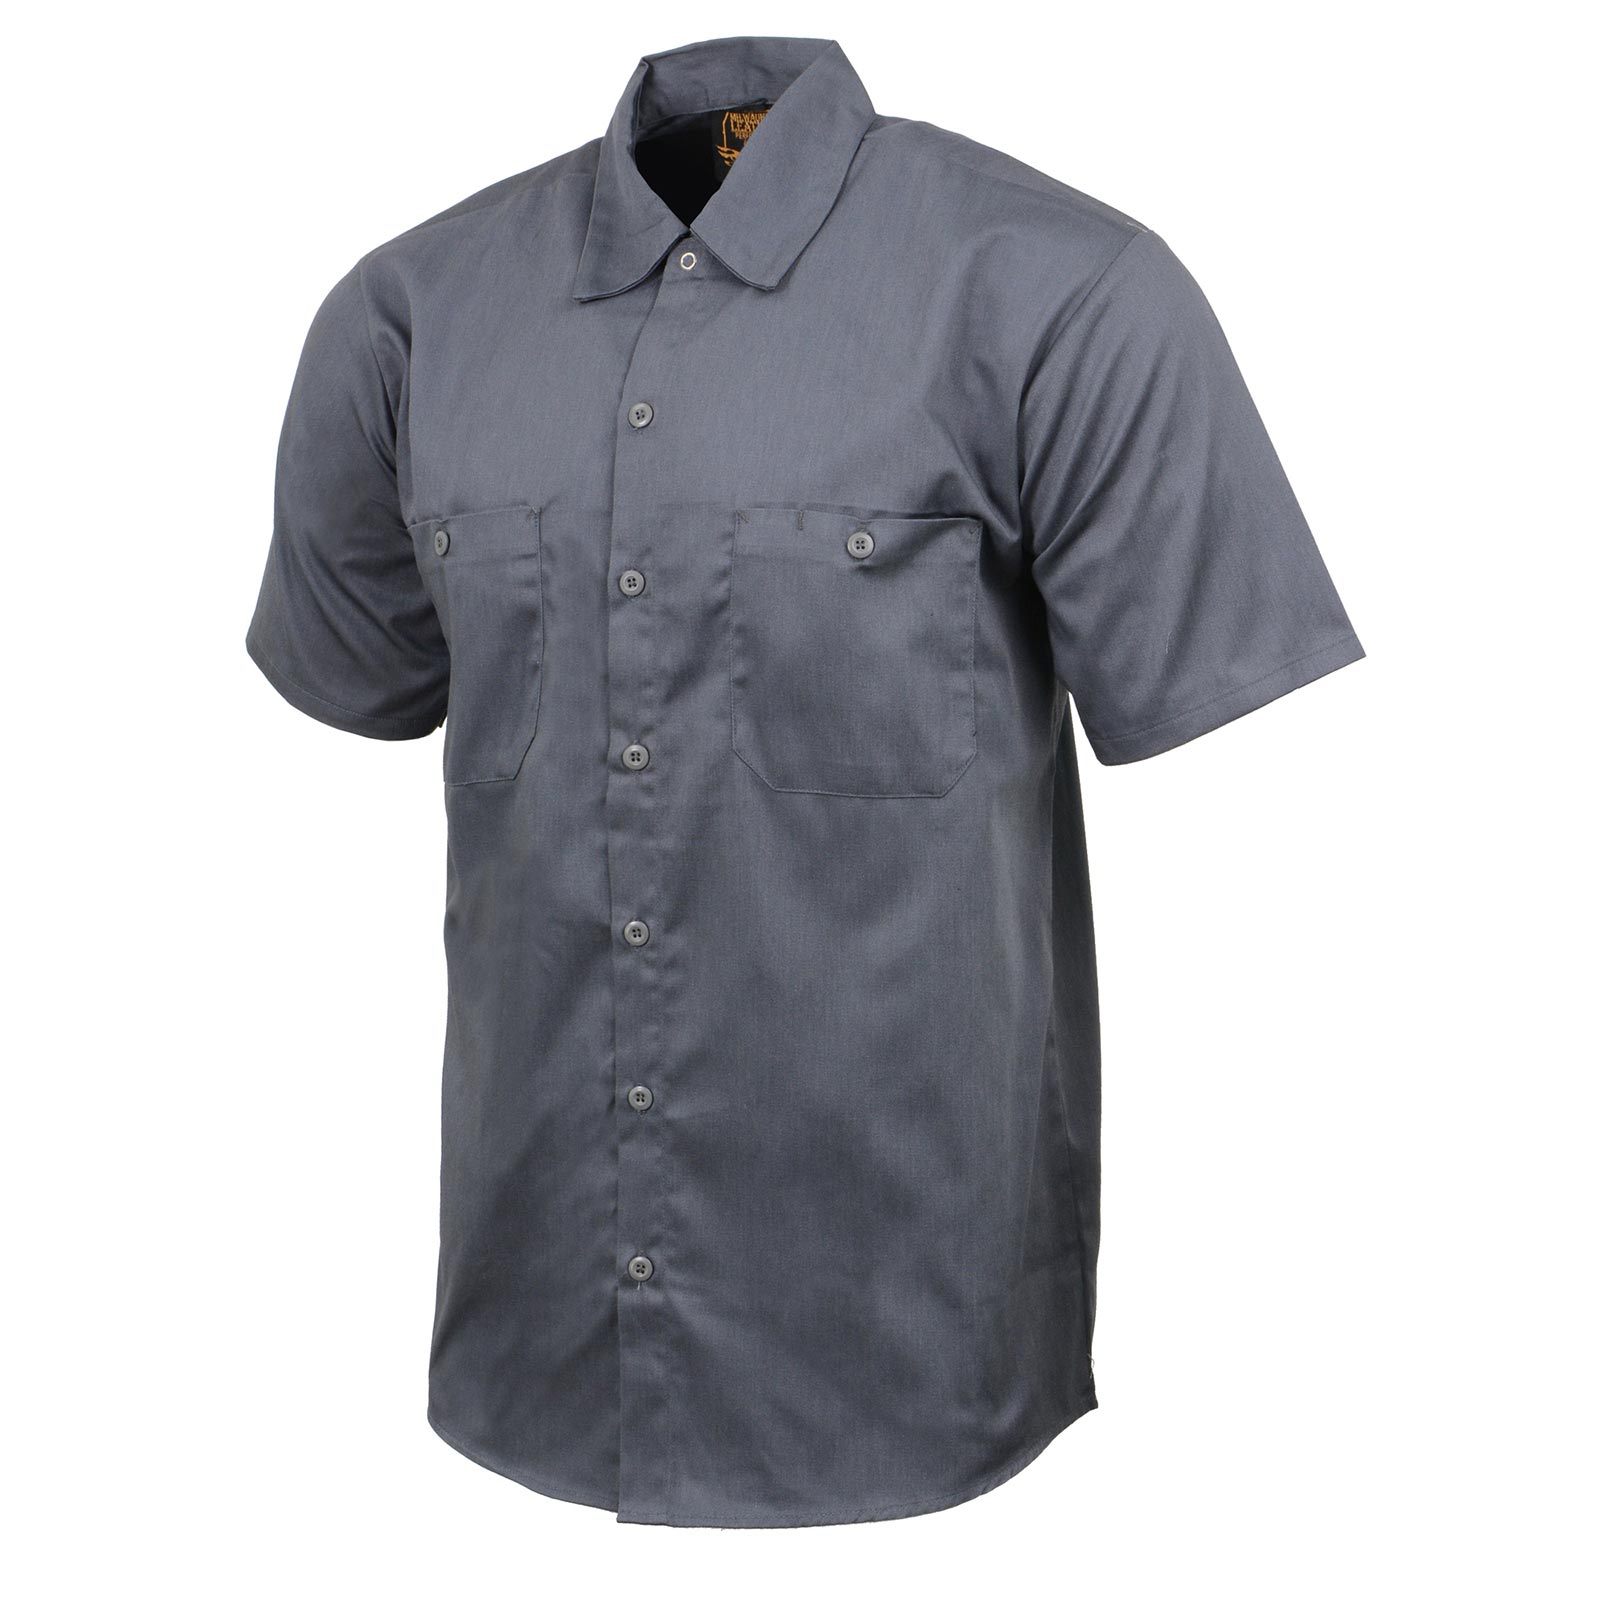 Milwaukee Leather MDM11668 Grey Button Up Heavy Duty Work Shirt For Men's, Classic Mechanic Work Shirt w/ Pockets